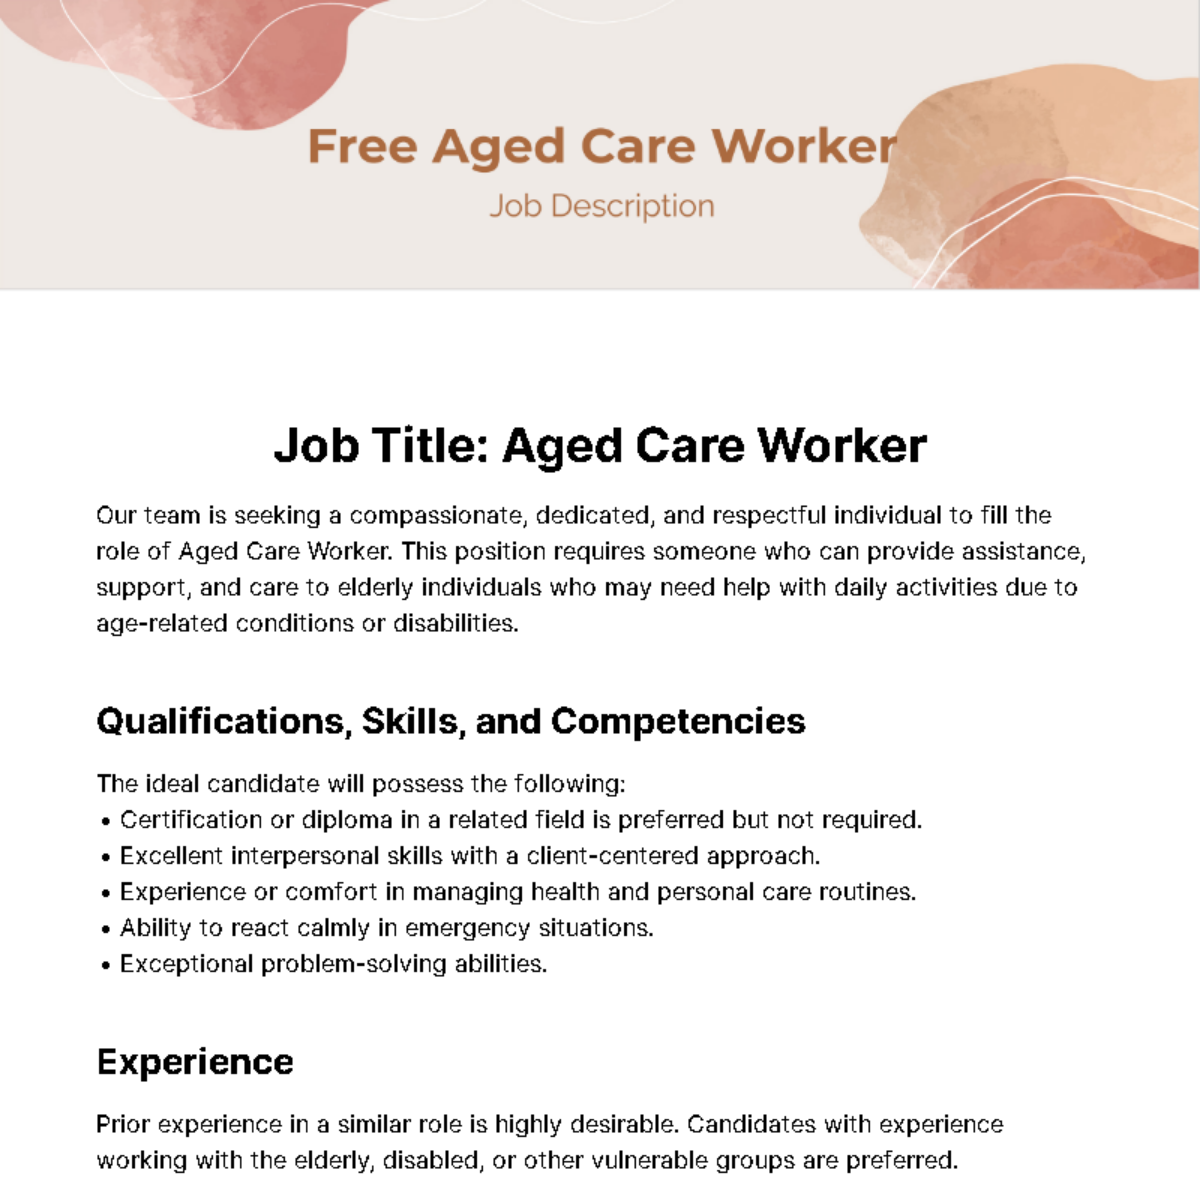 Free Aged Care Worker Job Description Template